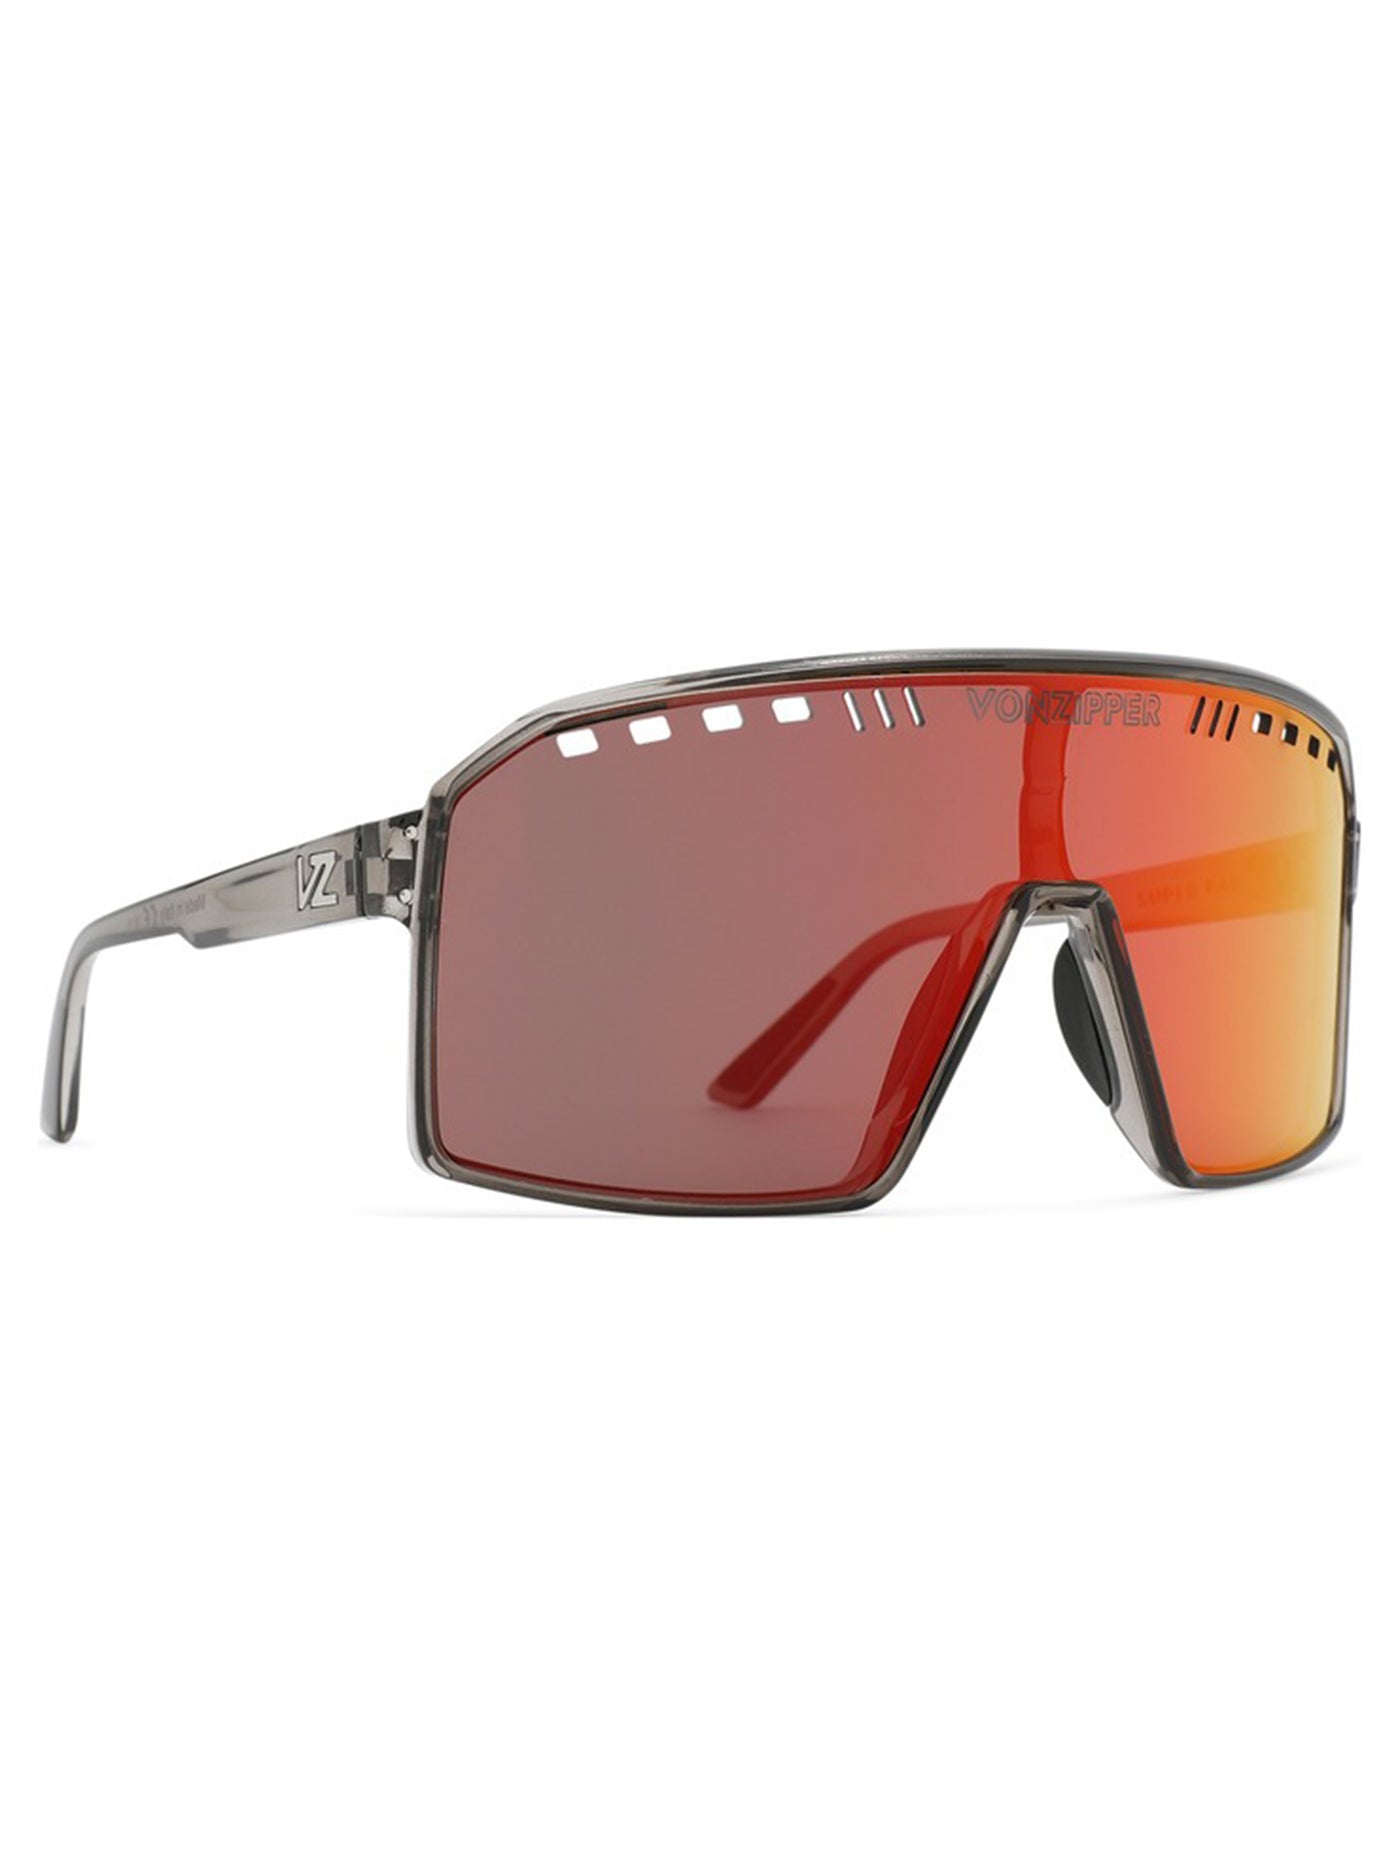 Von Zipper Super Rad Grey Trans Satin/Black Fire Sunglasses